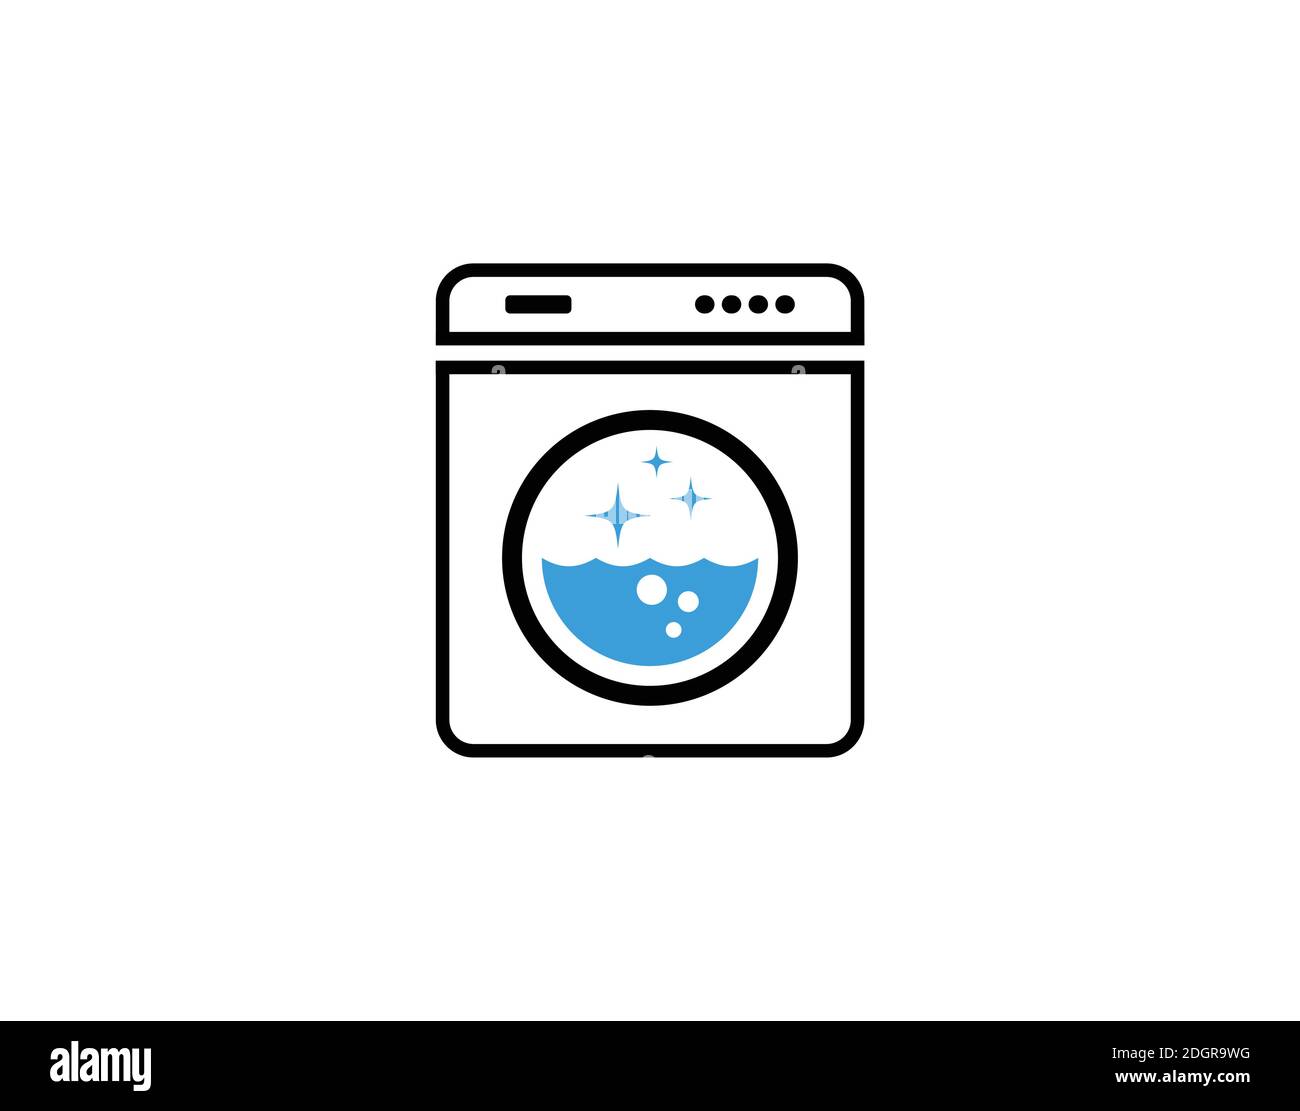 Washing machine logo symbol design inspiration Stock Vector